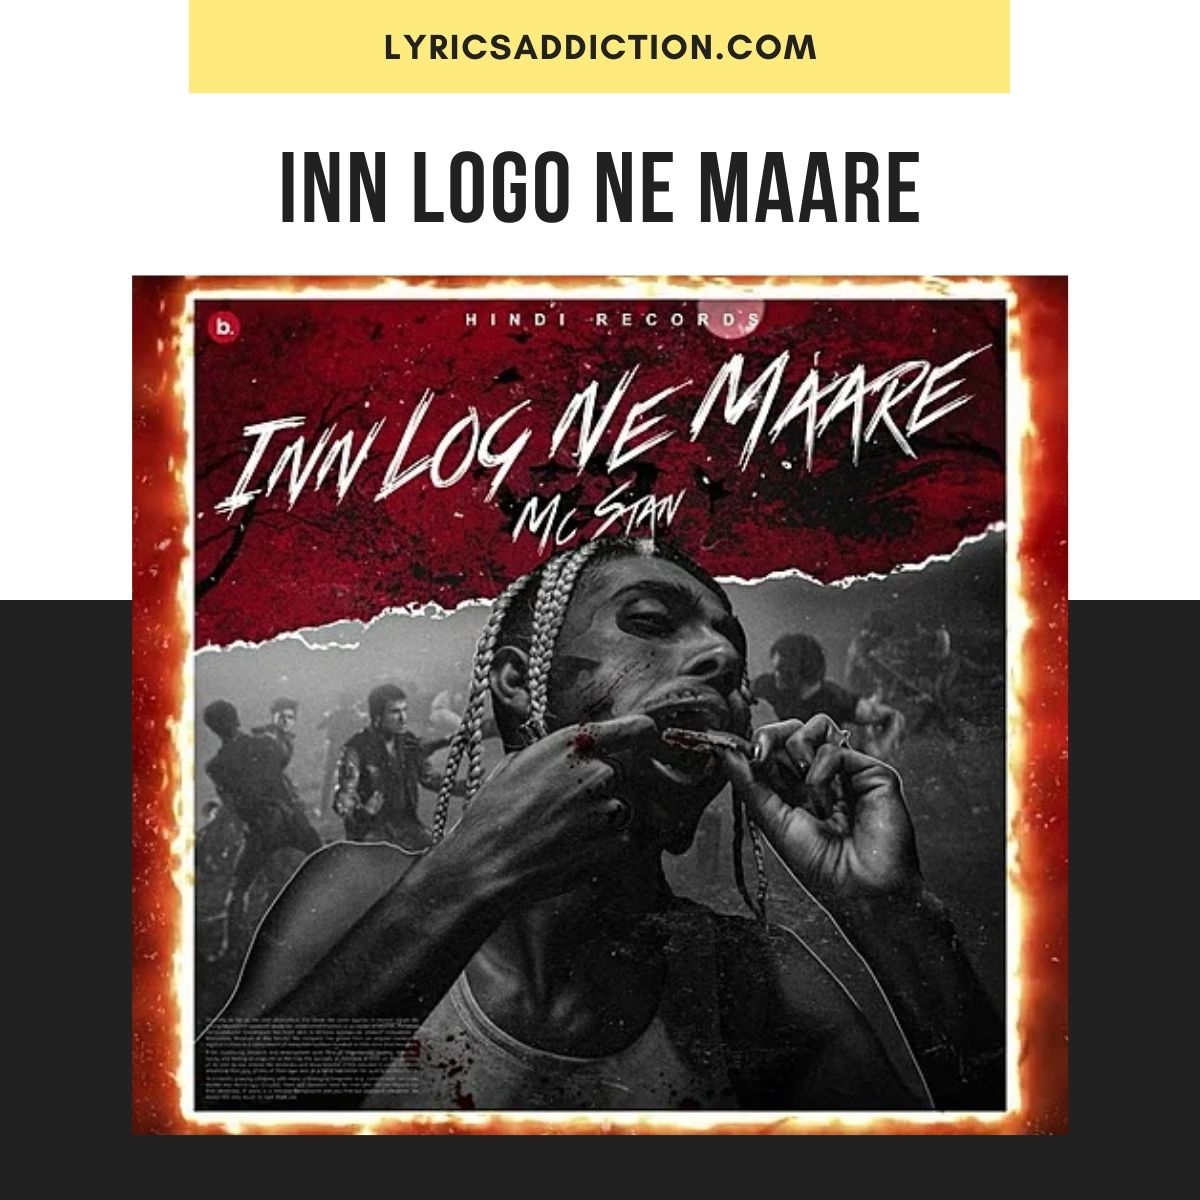 MC STAN - Inn Log Ne Maare: lyrics and songs